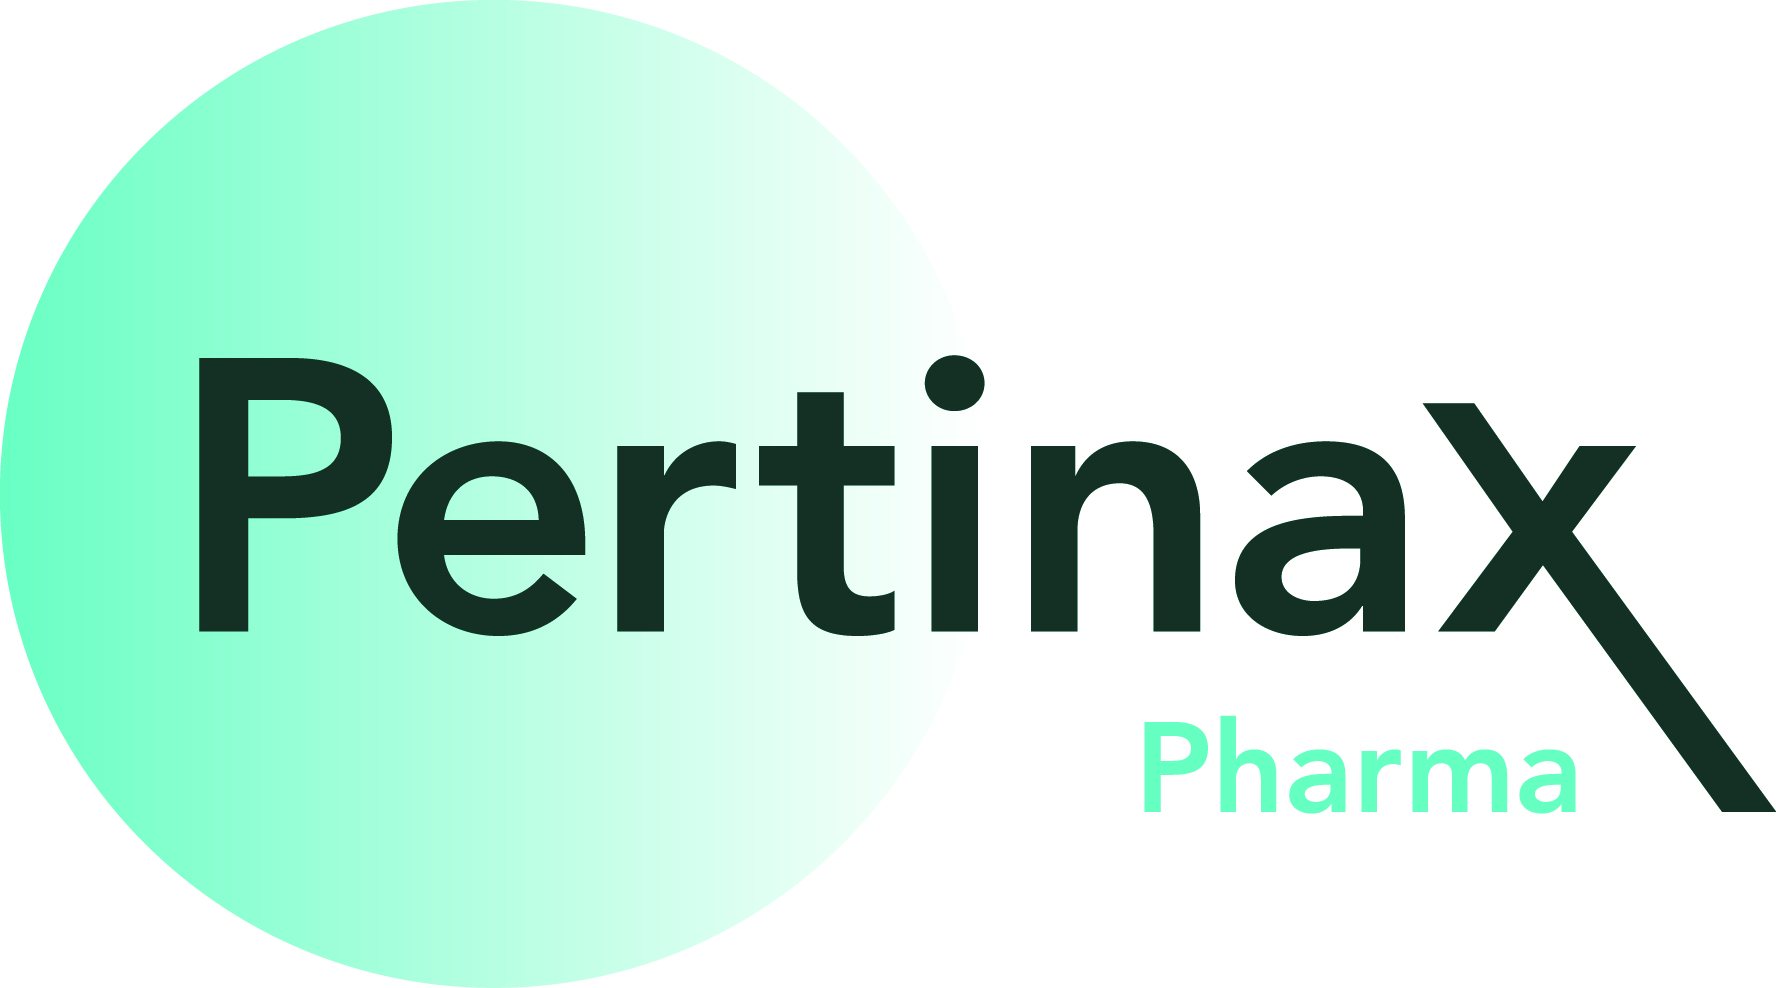 Pertinax Pharma logo (Michele Barbour) 